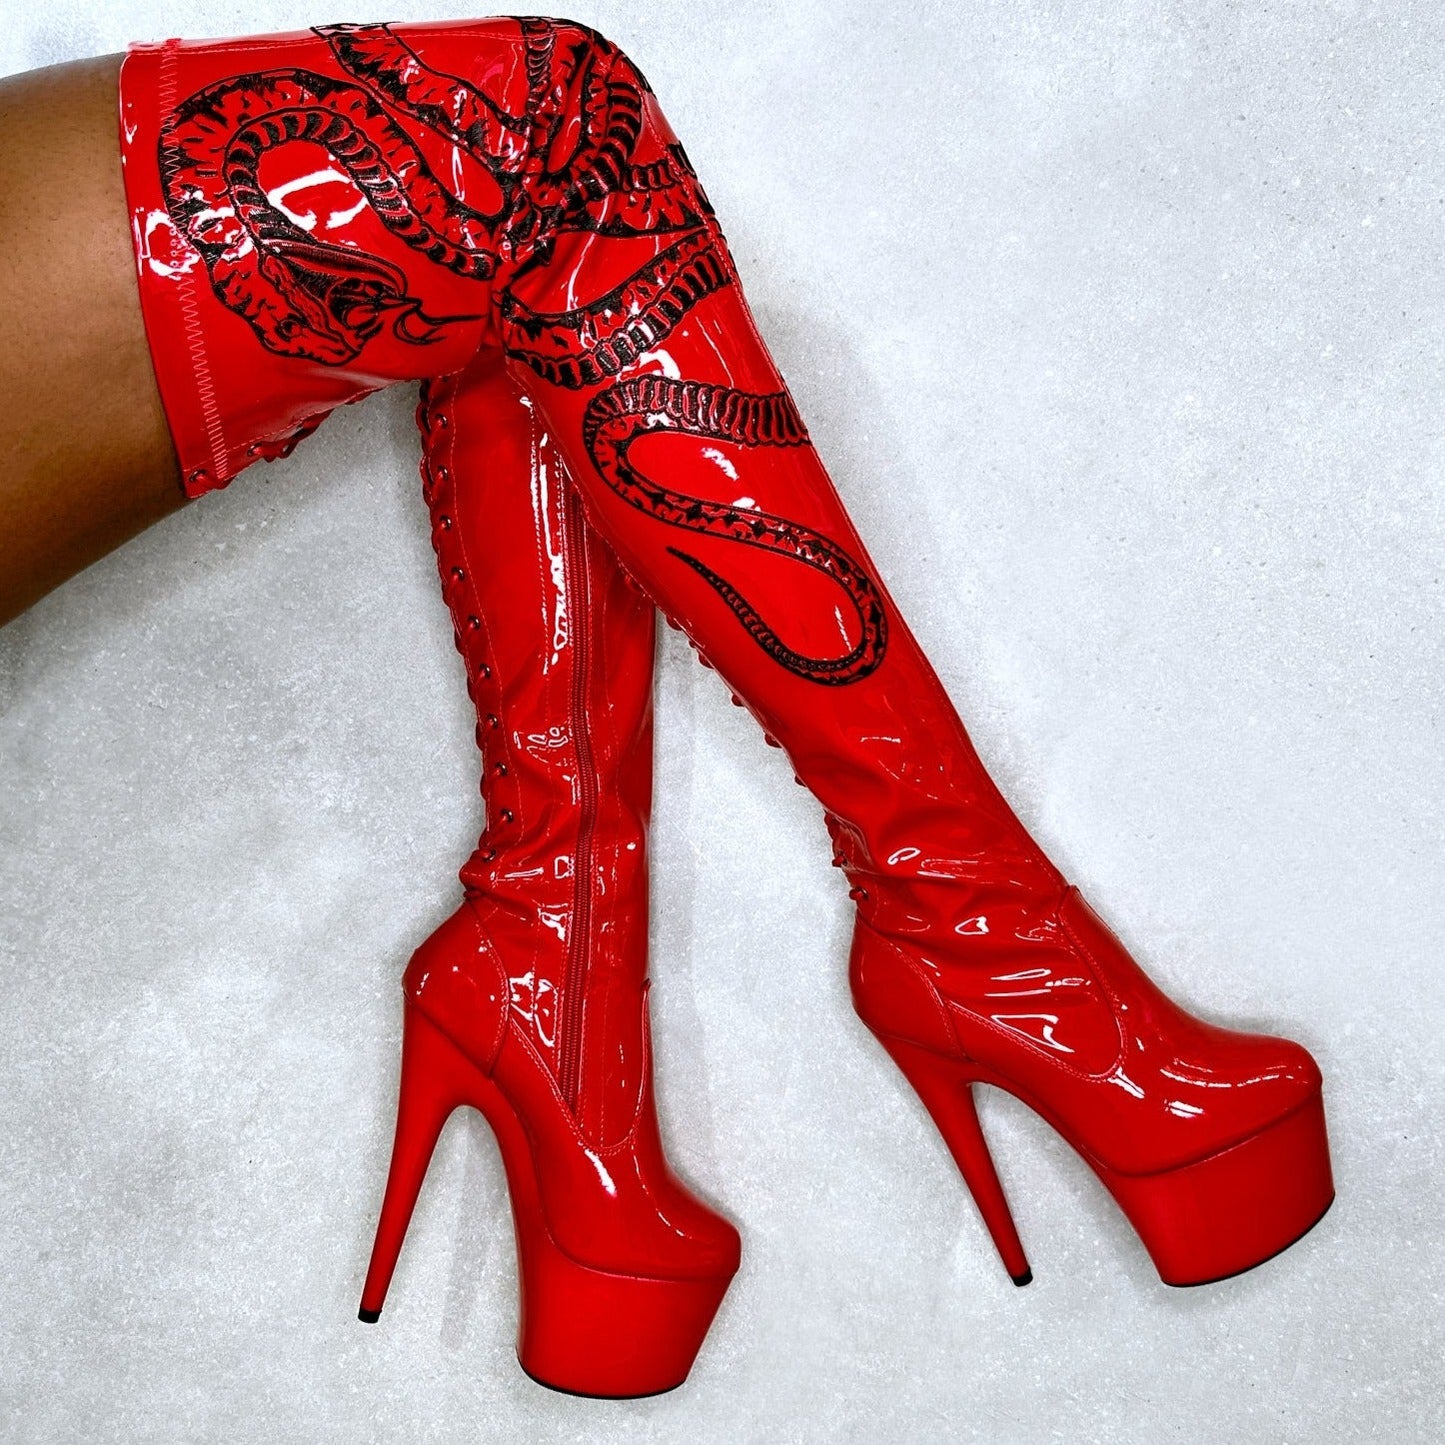 VIPER Boot Red with Black Thigh High - 7INCH, stripper shoe, stripper heel, pole heel, not a pleaser, platform, dancer, pole dance, floor work